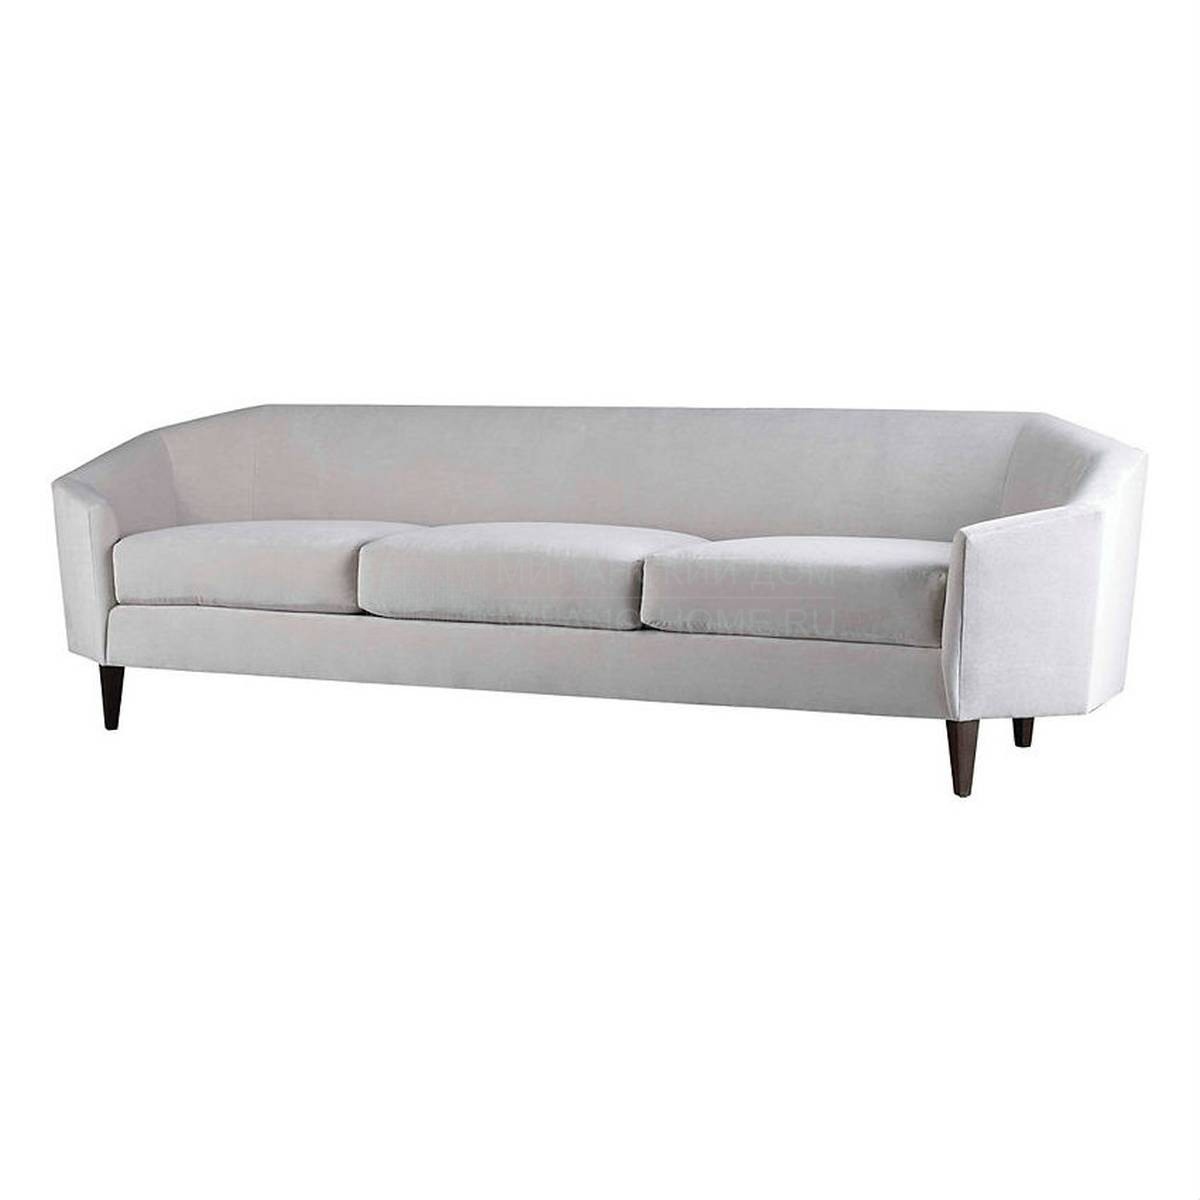 Прямой диван Diamond sofa из США фабрики BAKER